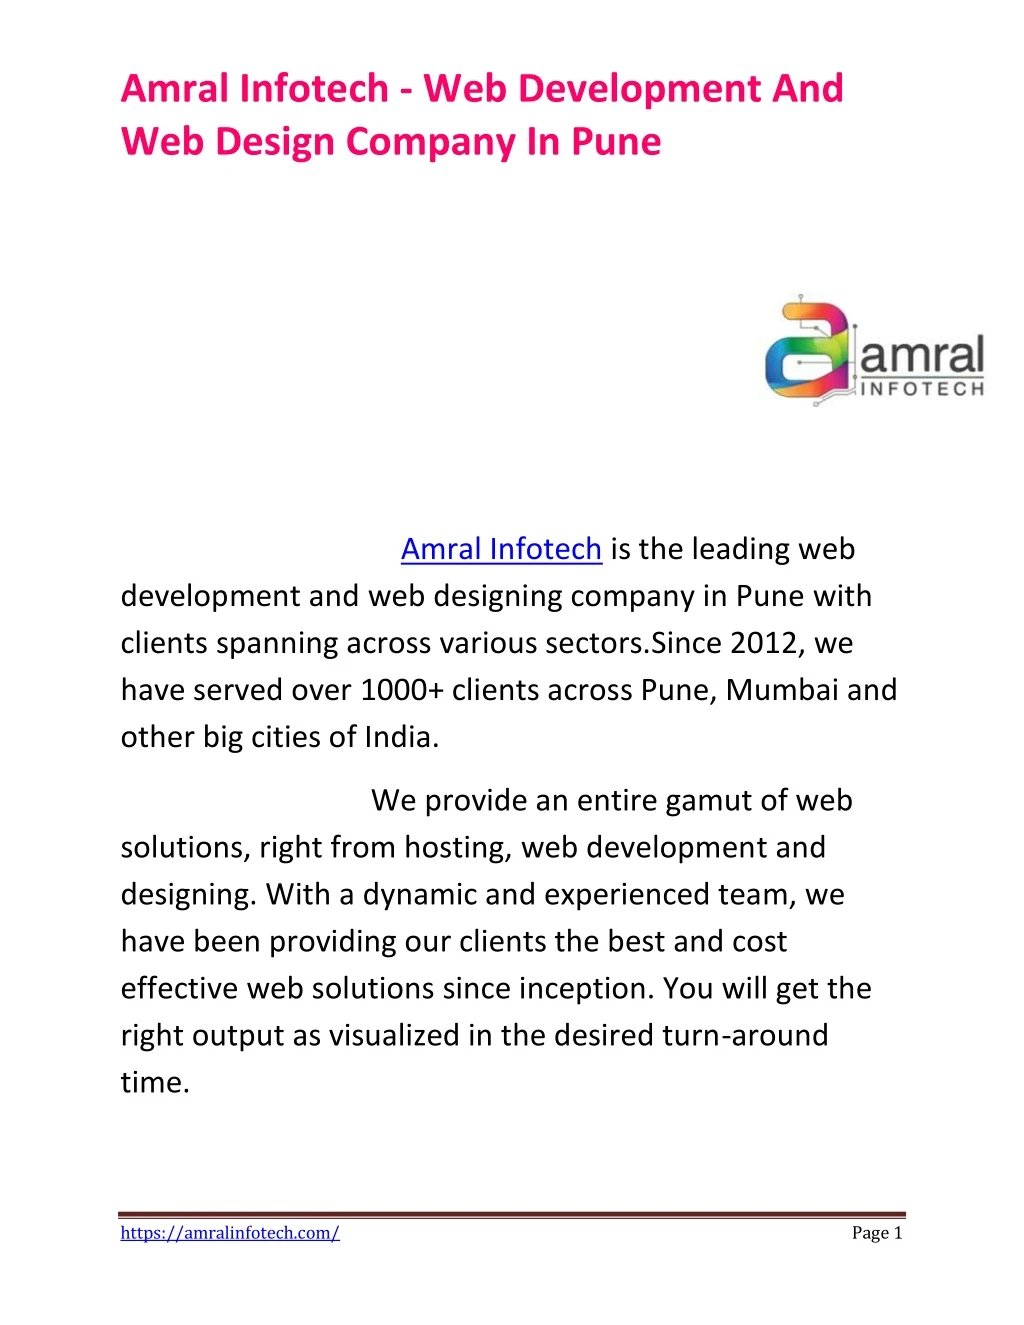 amral infotech web development and web design